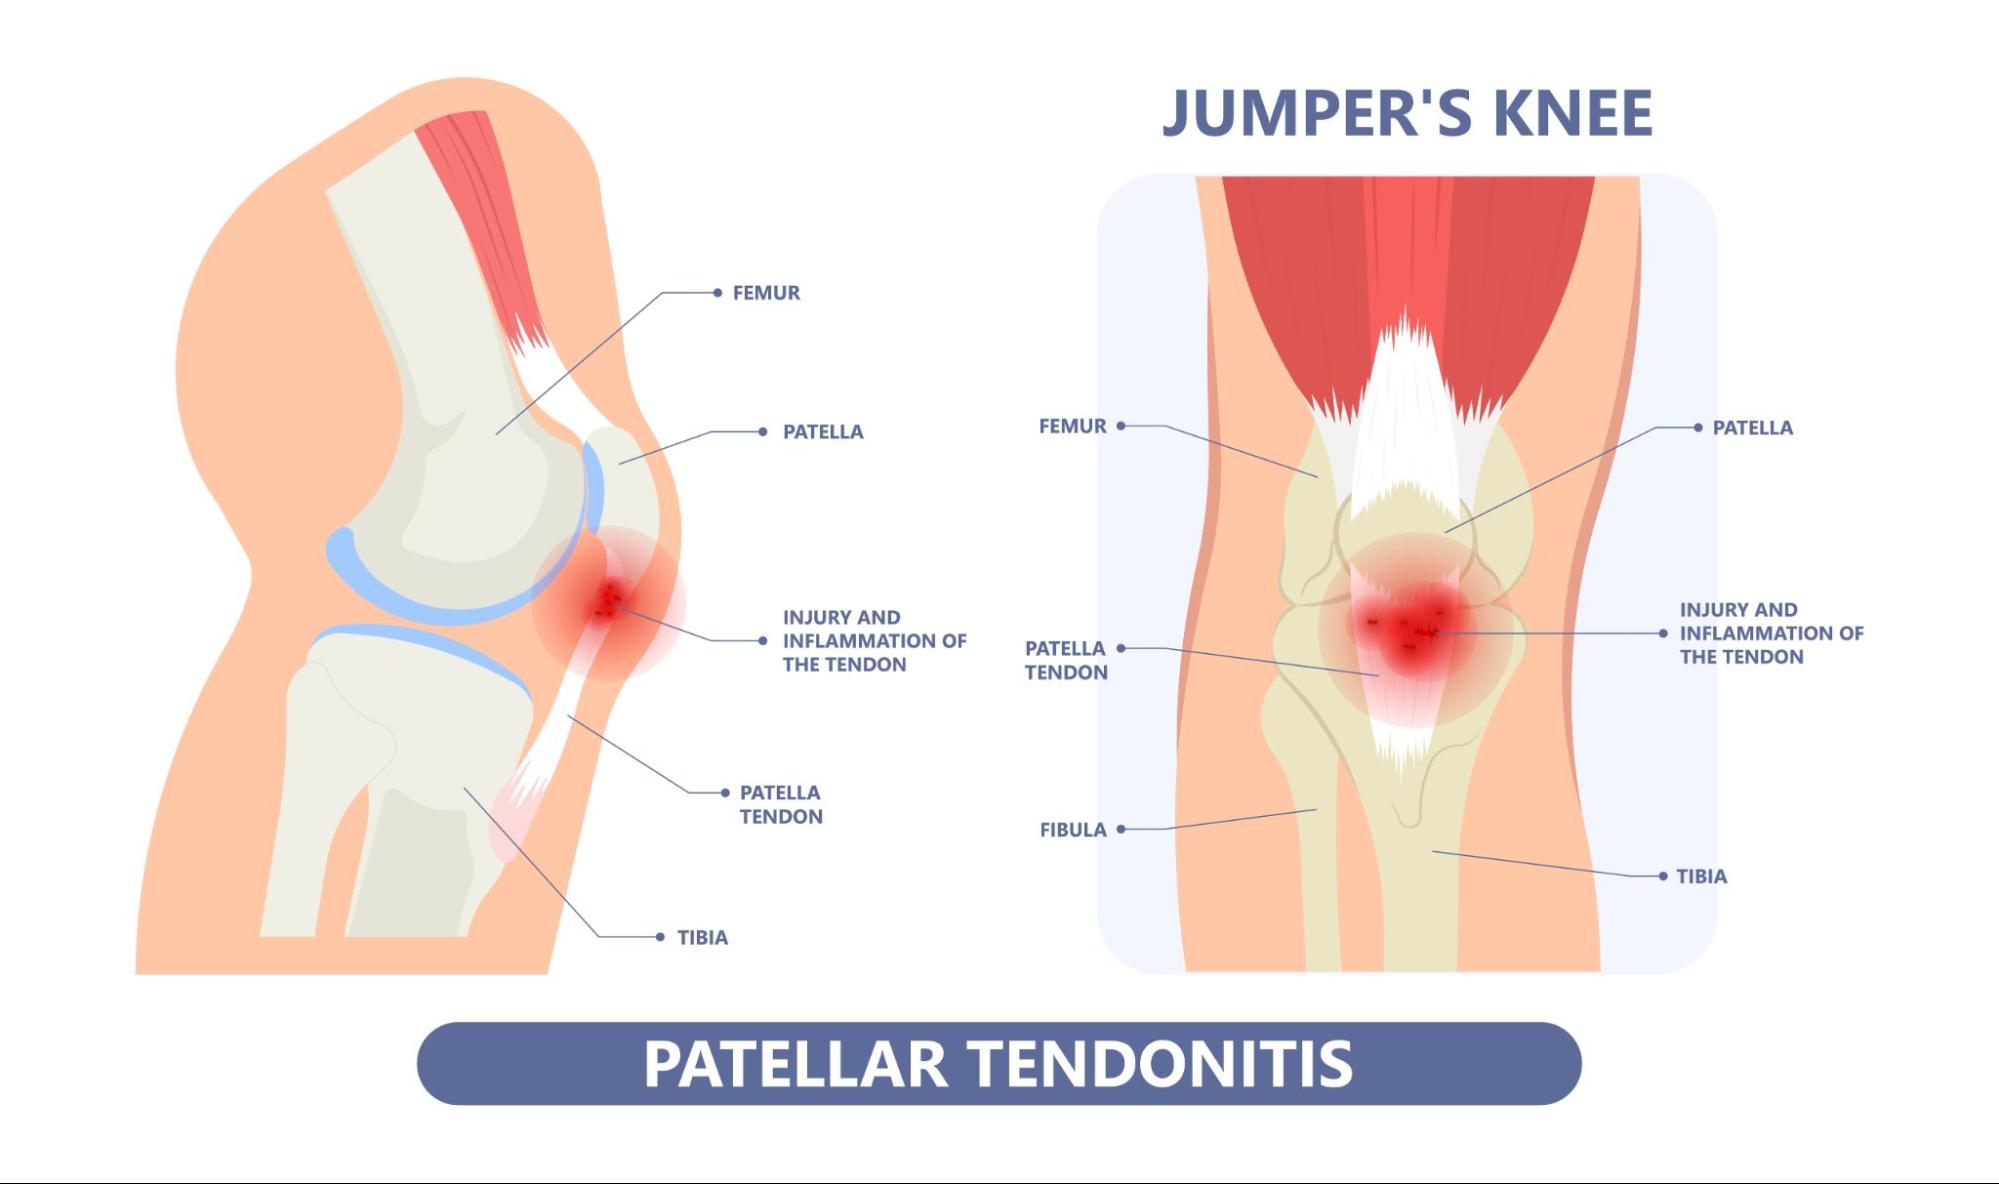 Jumper's Knee (Patellar Tendonitis)